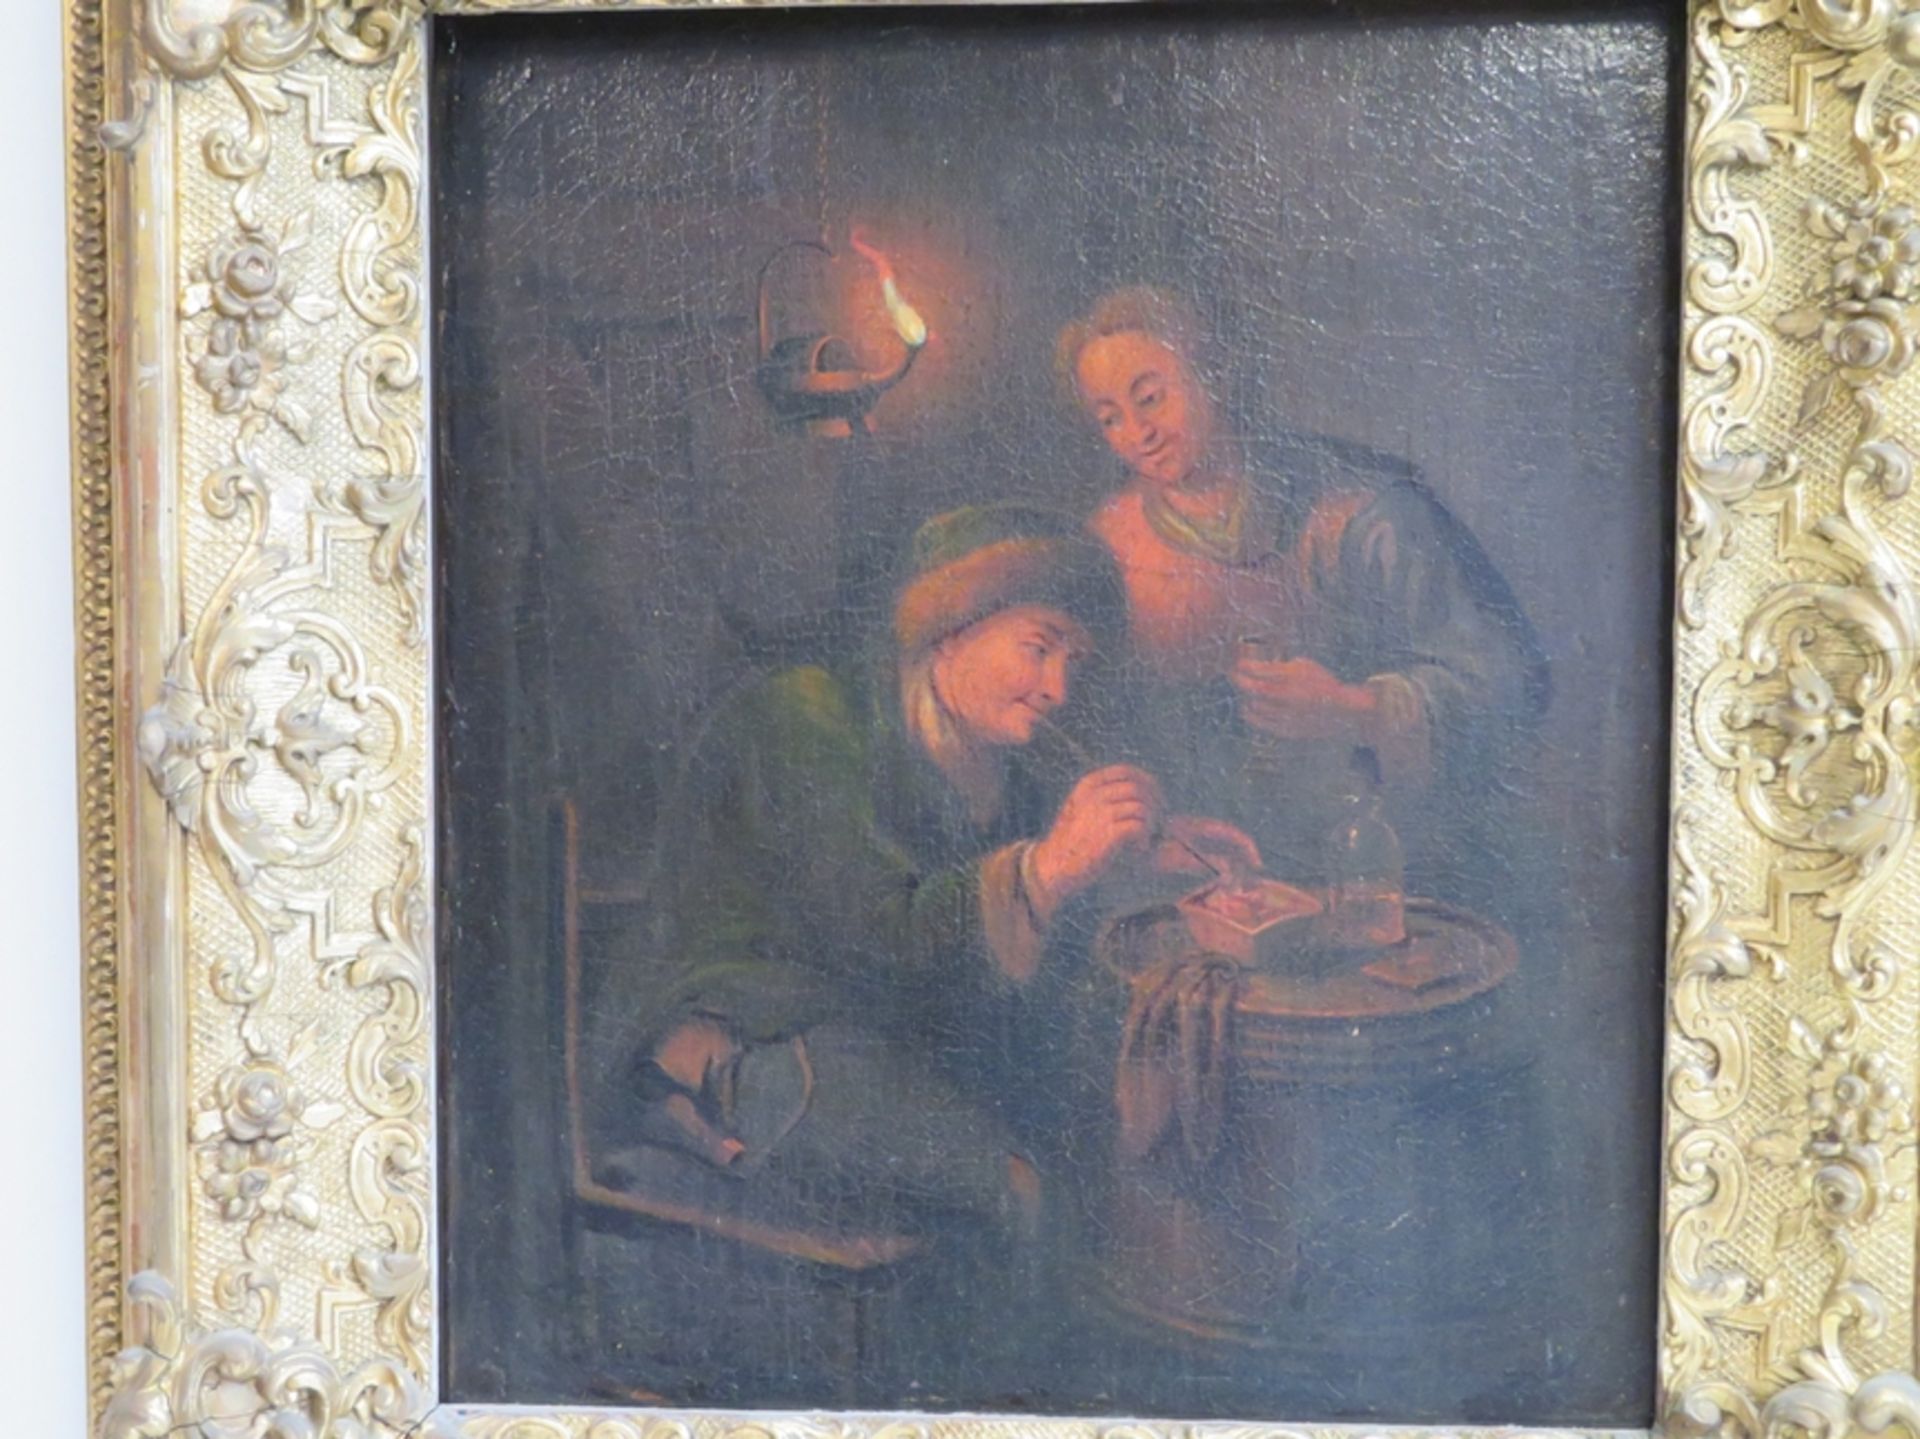 Niederlande, 18./19. Jahrhundert, "Zwei Personen bei Kerzenlicht", Öl/Leinwand, doubliert, 41 x 36 